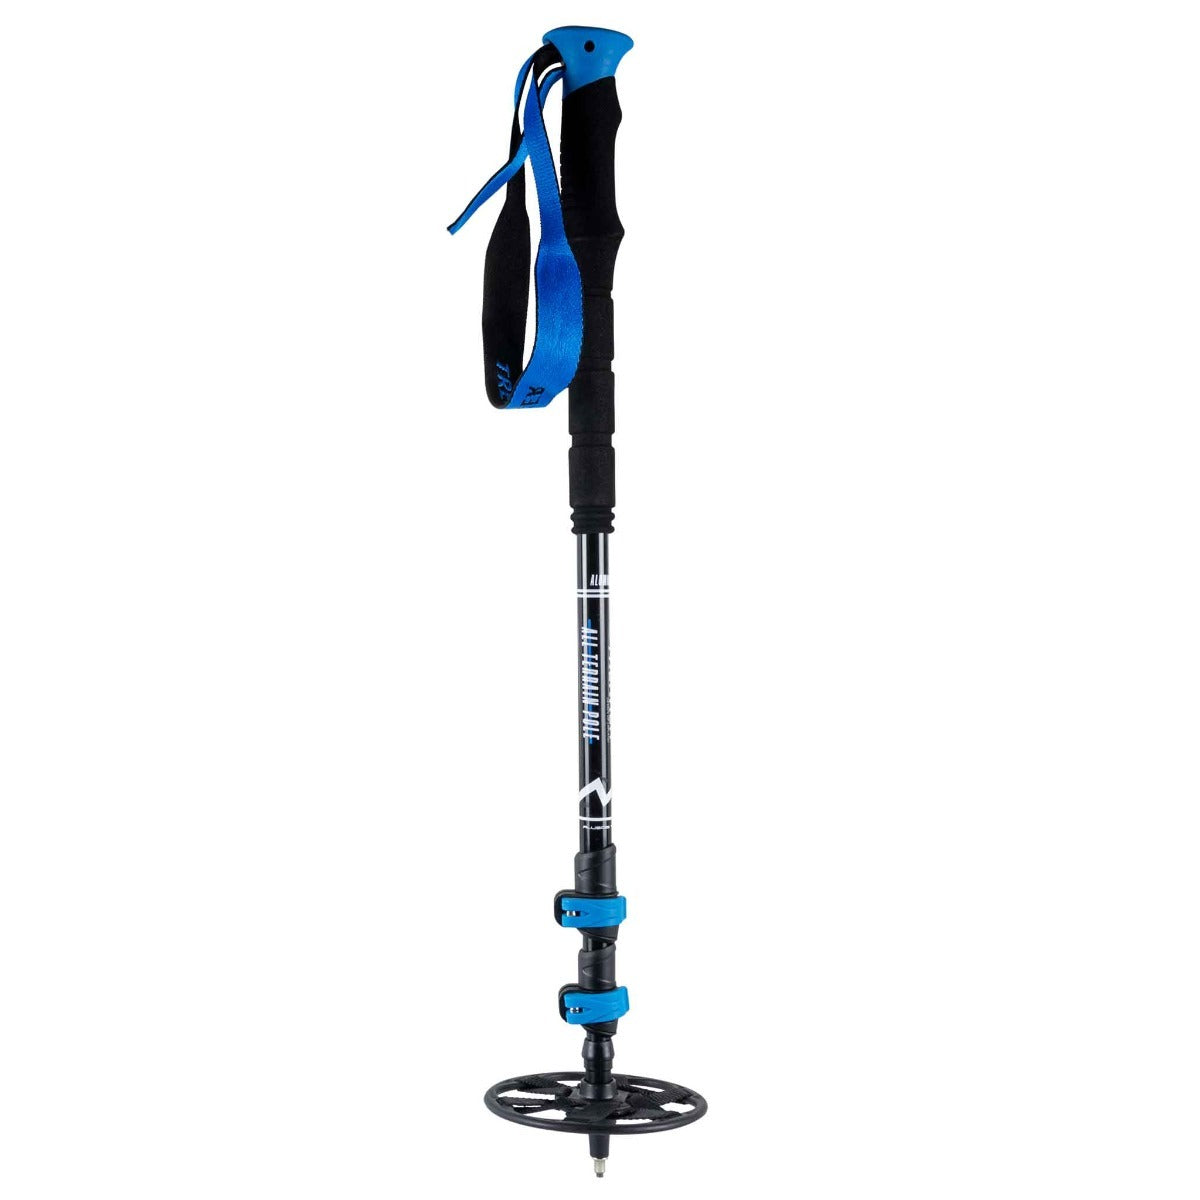 Trekker Snowshoe pole, adjustable